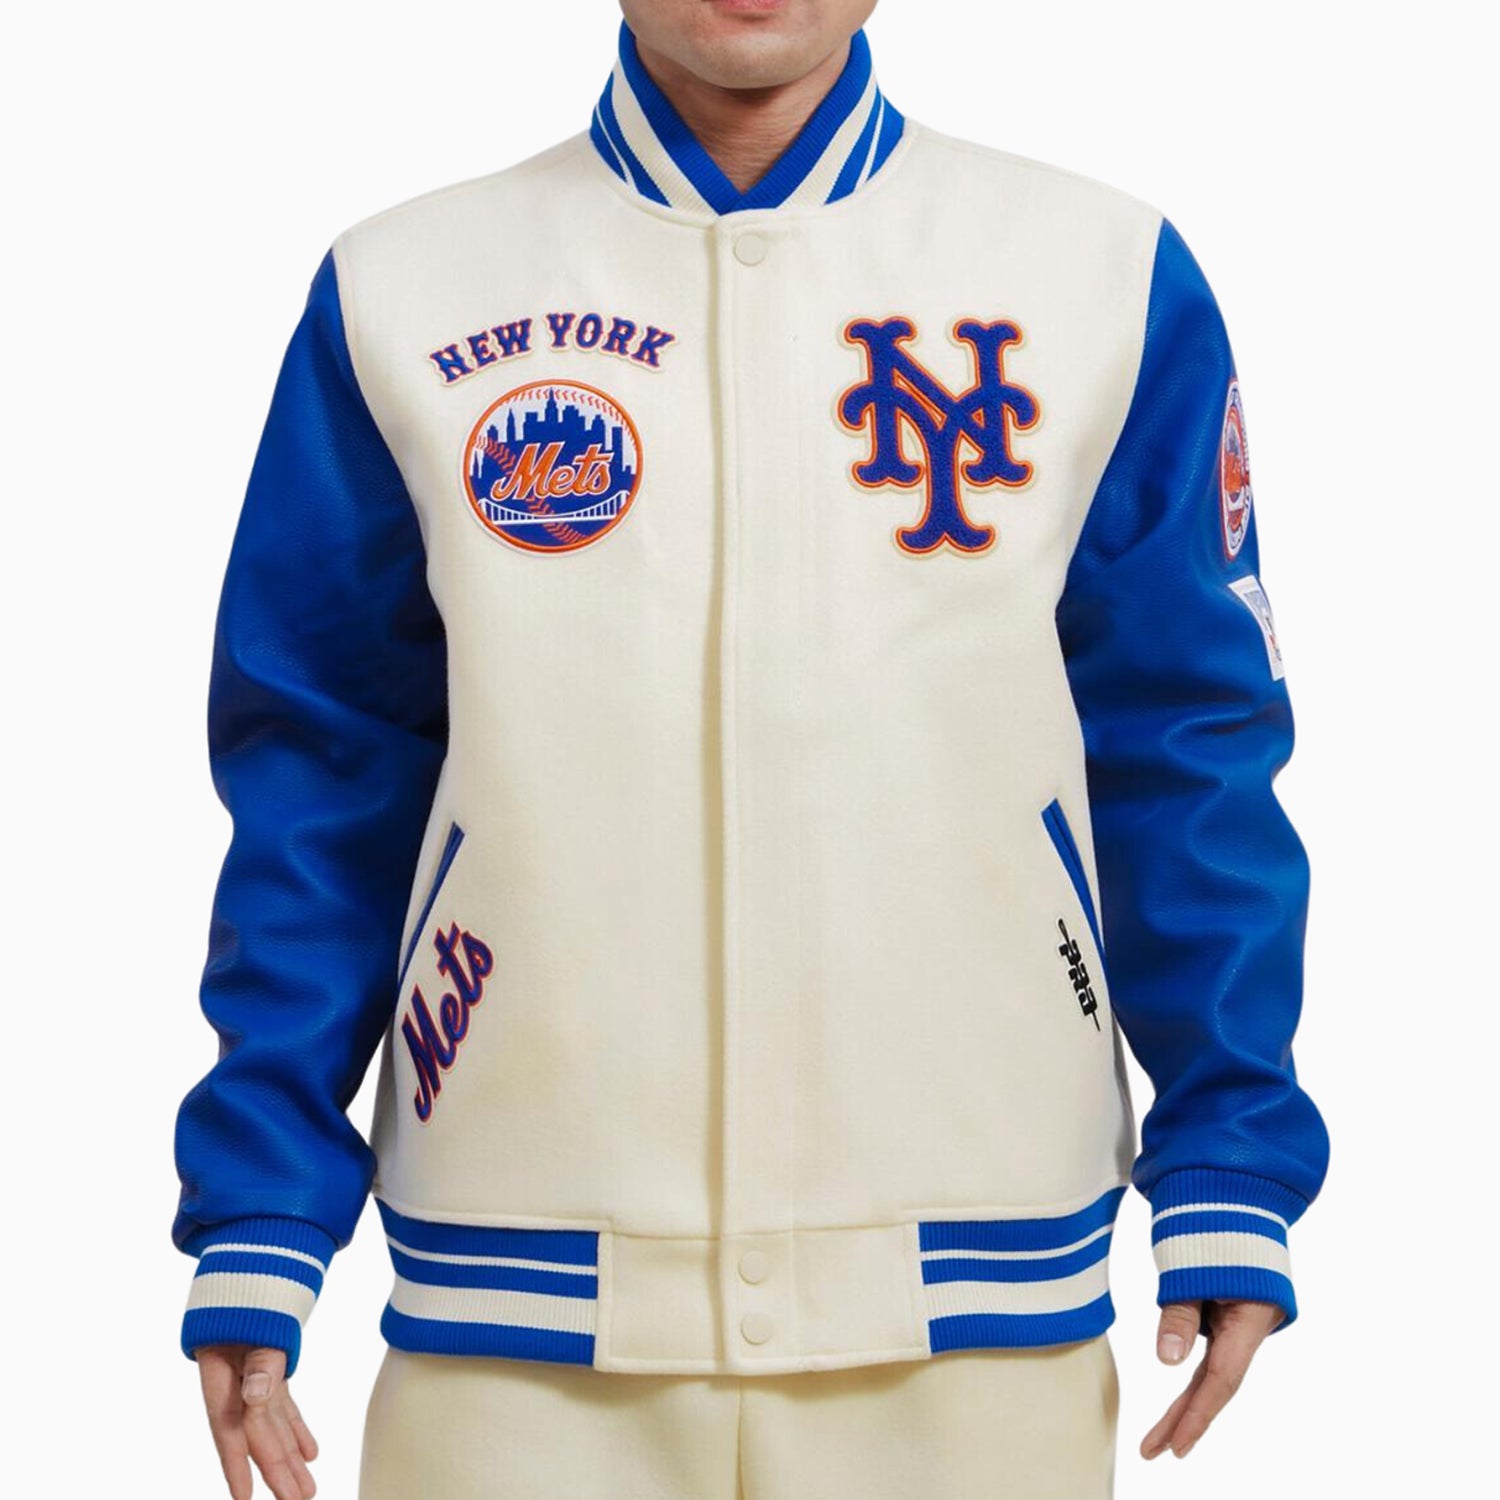 Pro Standard Men's New York Mets Retro Rib MLB Wool Varsity Jacket, Eggshell Royal Blue / 3XL